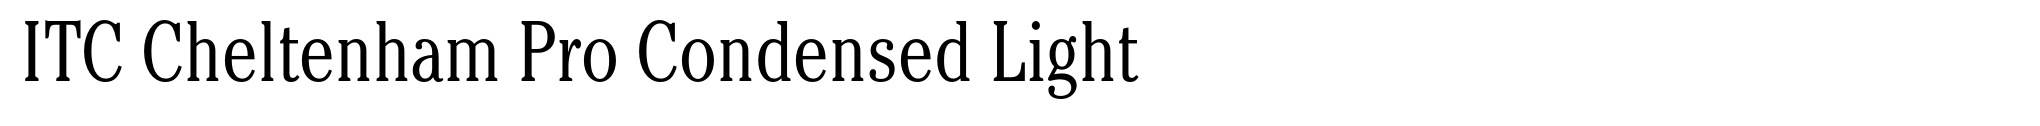 ITC Cheltenham Pro Condensed Light image